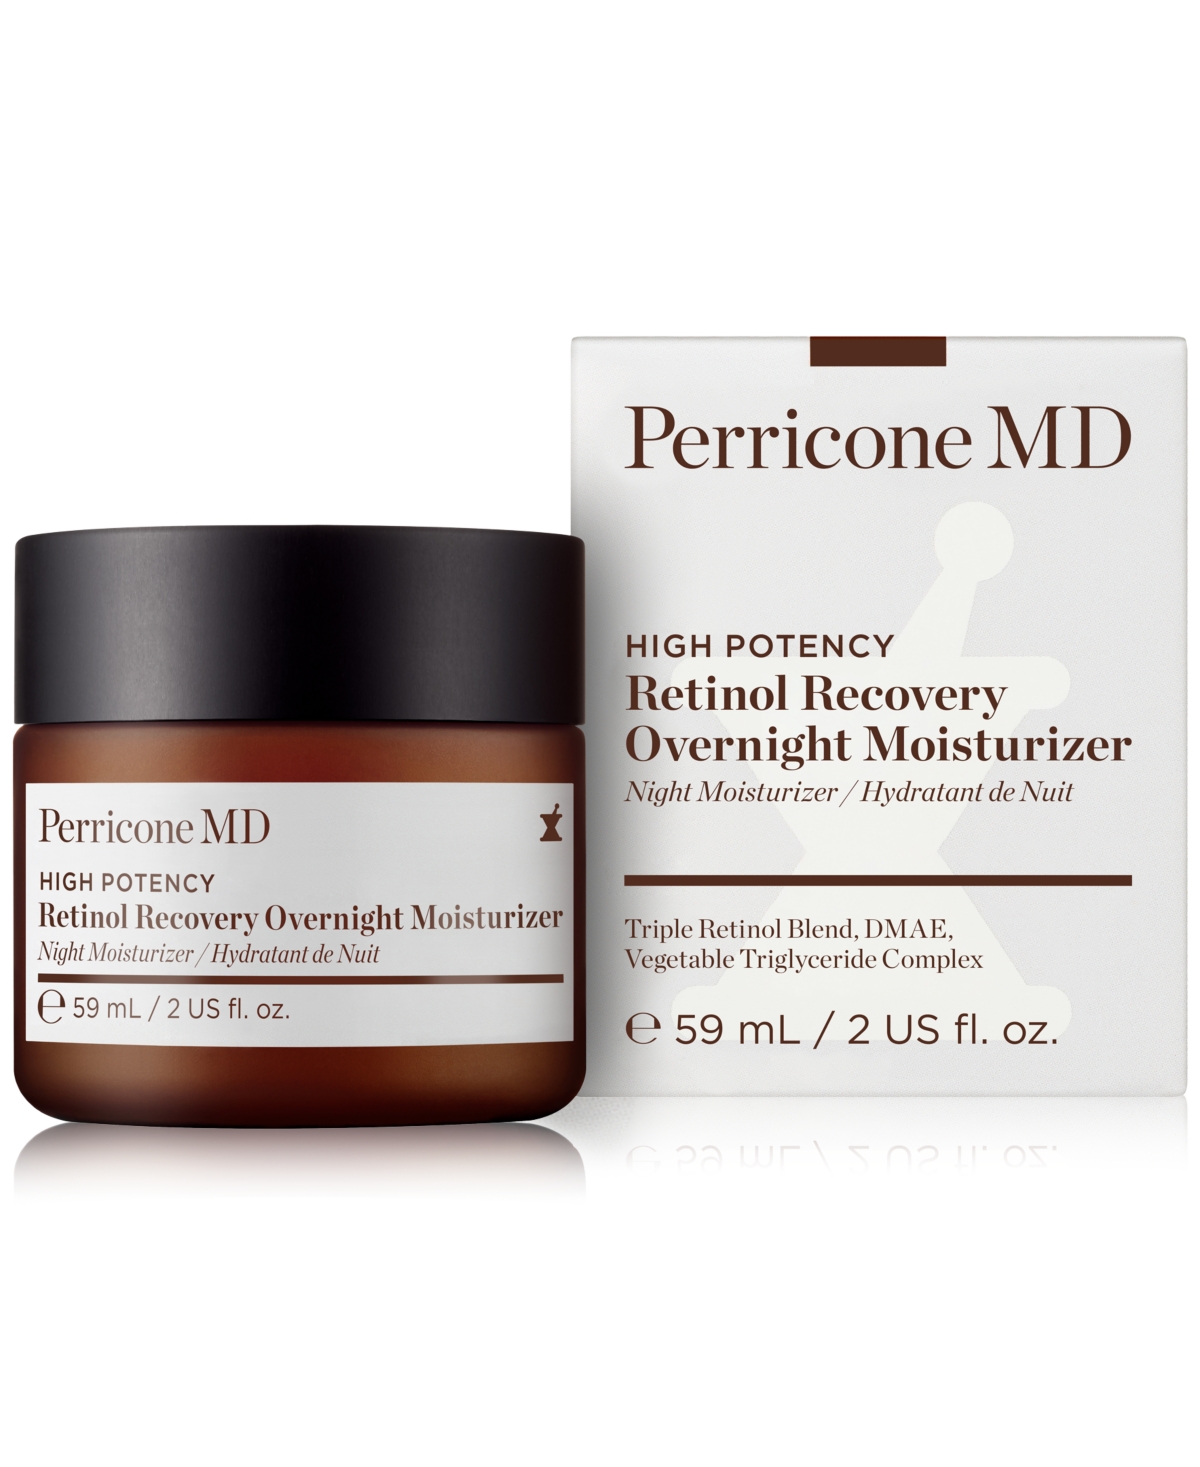 Perricone Md High Potency Retinol Recovery Overnight Moisturizer, 2 Oz.